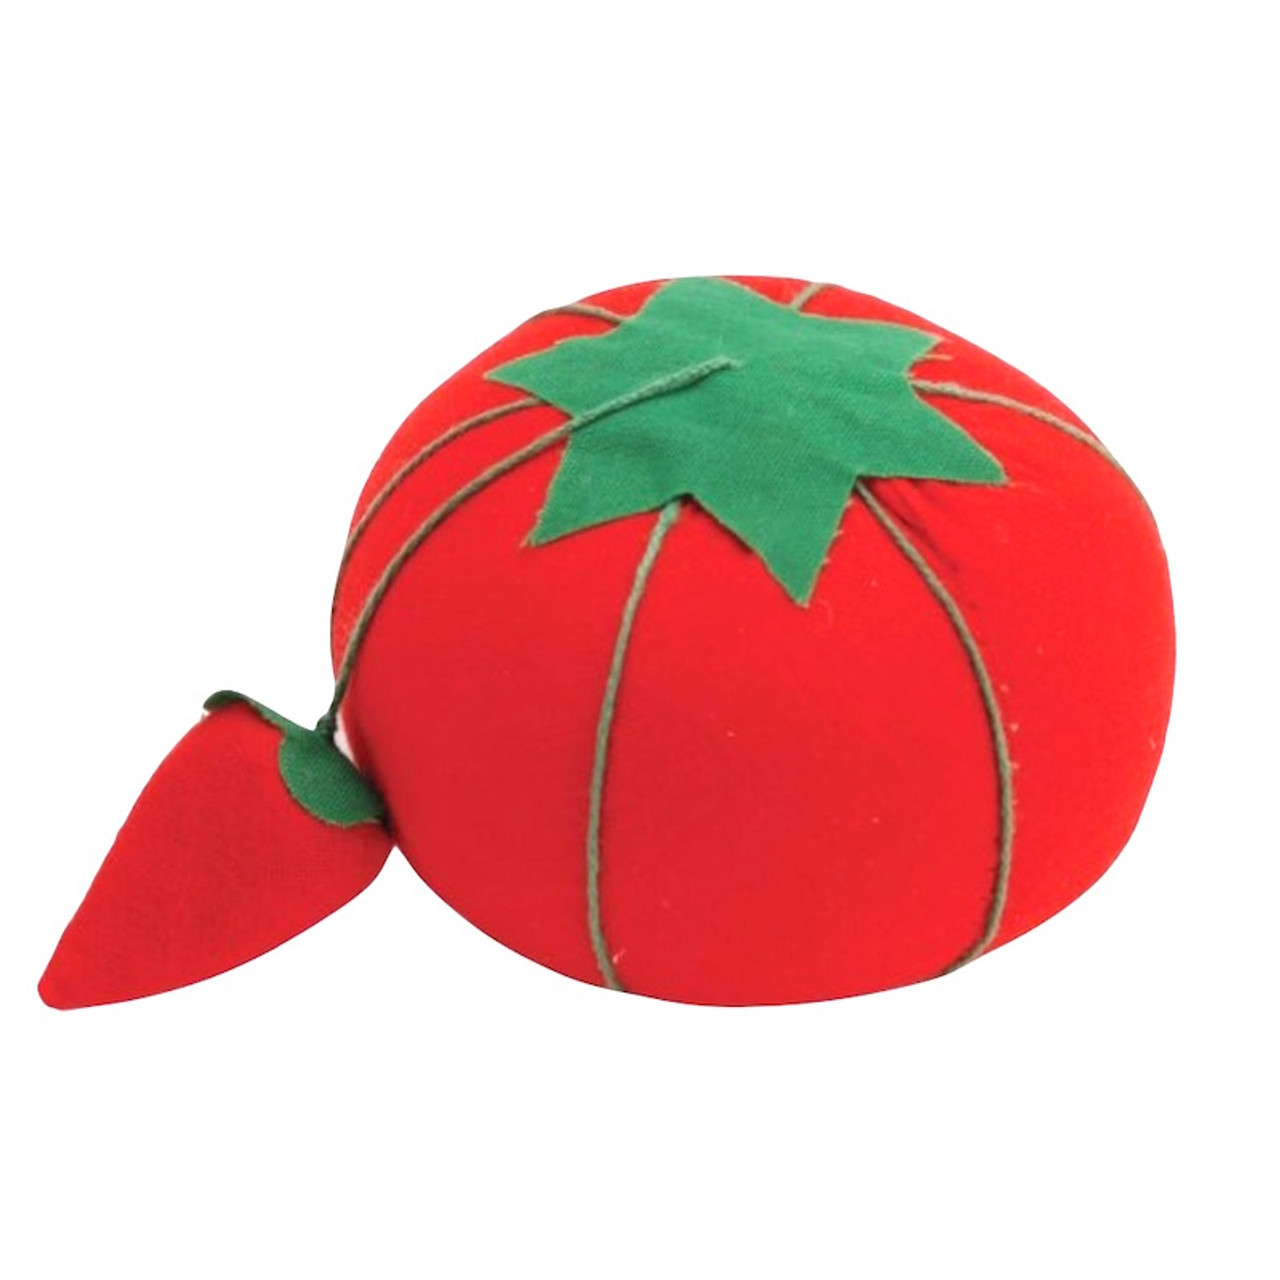 Tomato Pin Cushion - 2 3/4 - Red - WAWAK Sewing Supplies